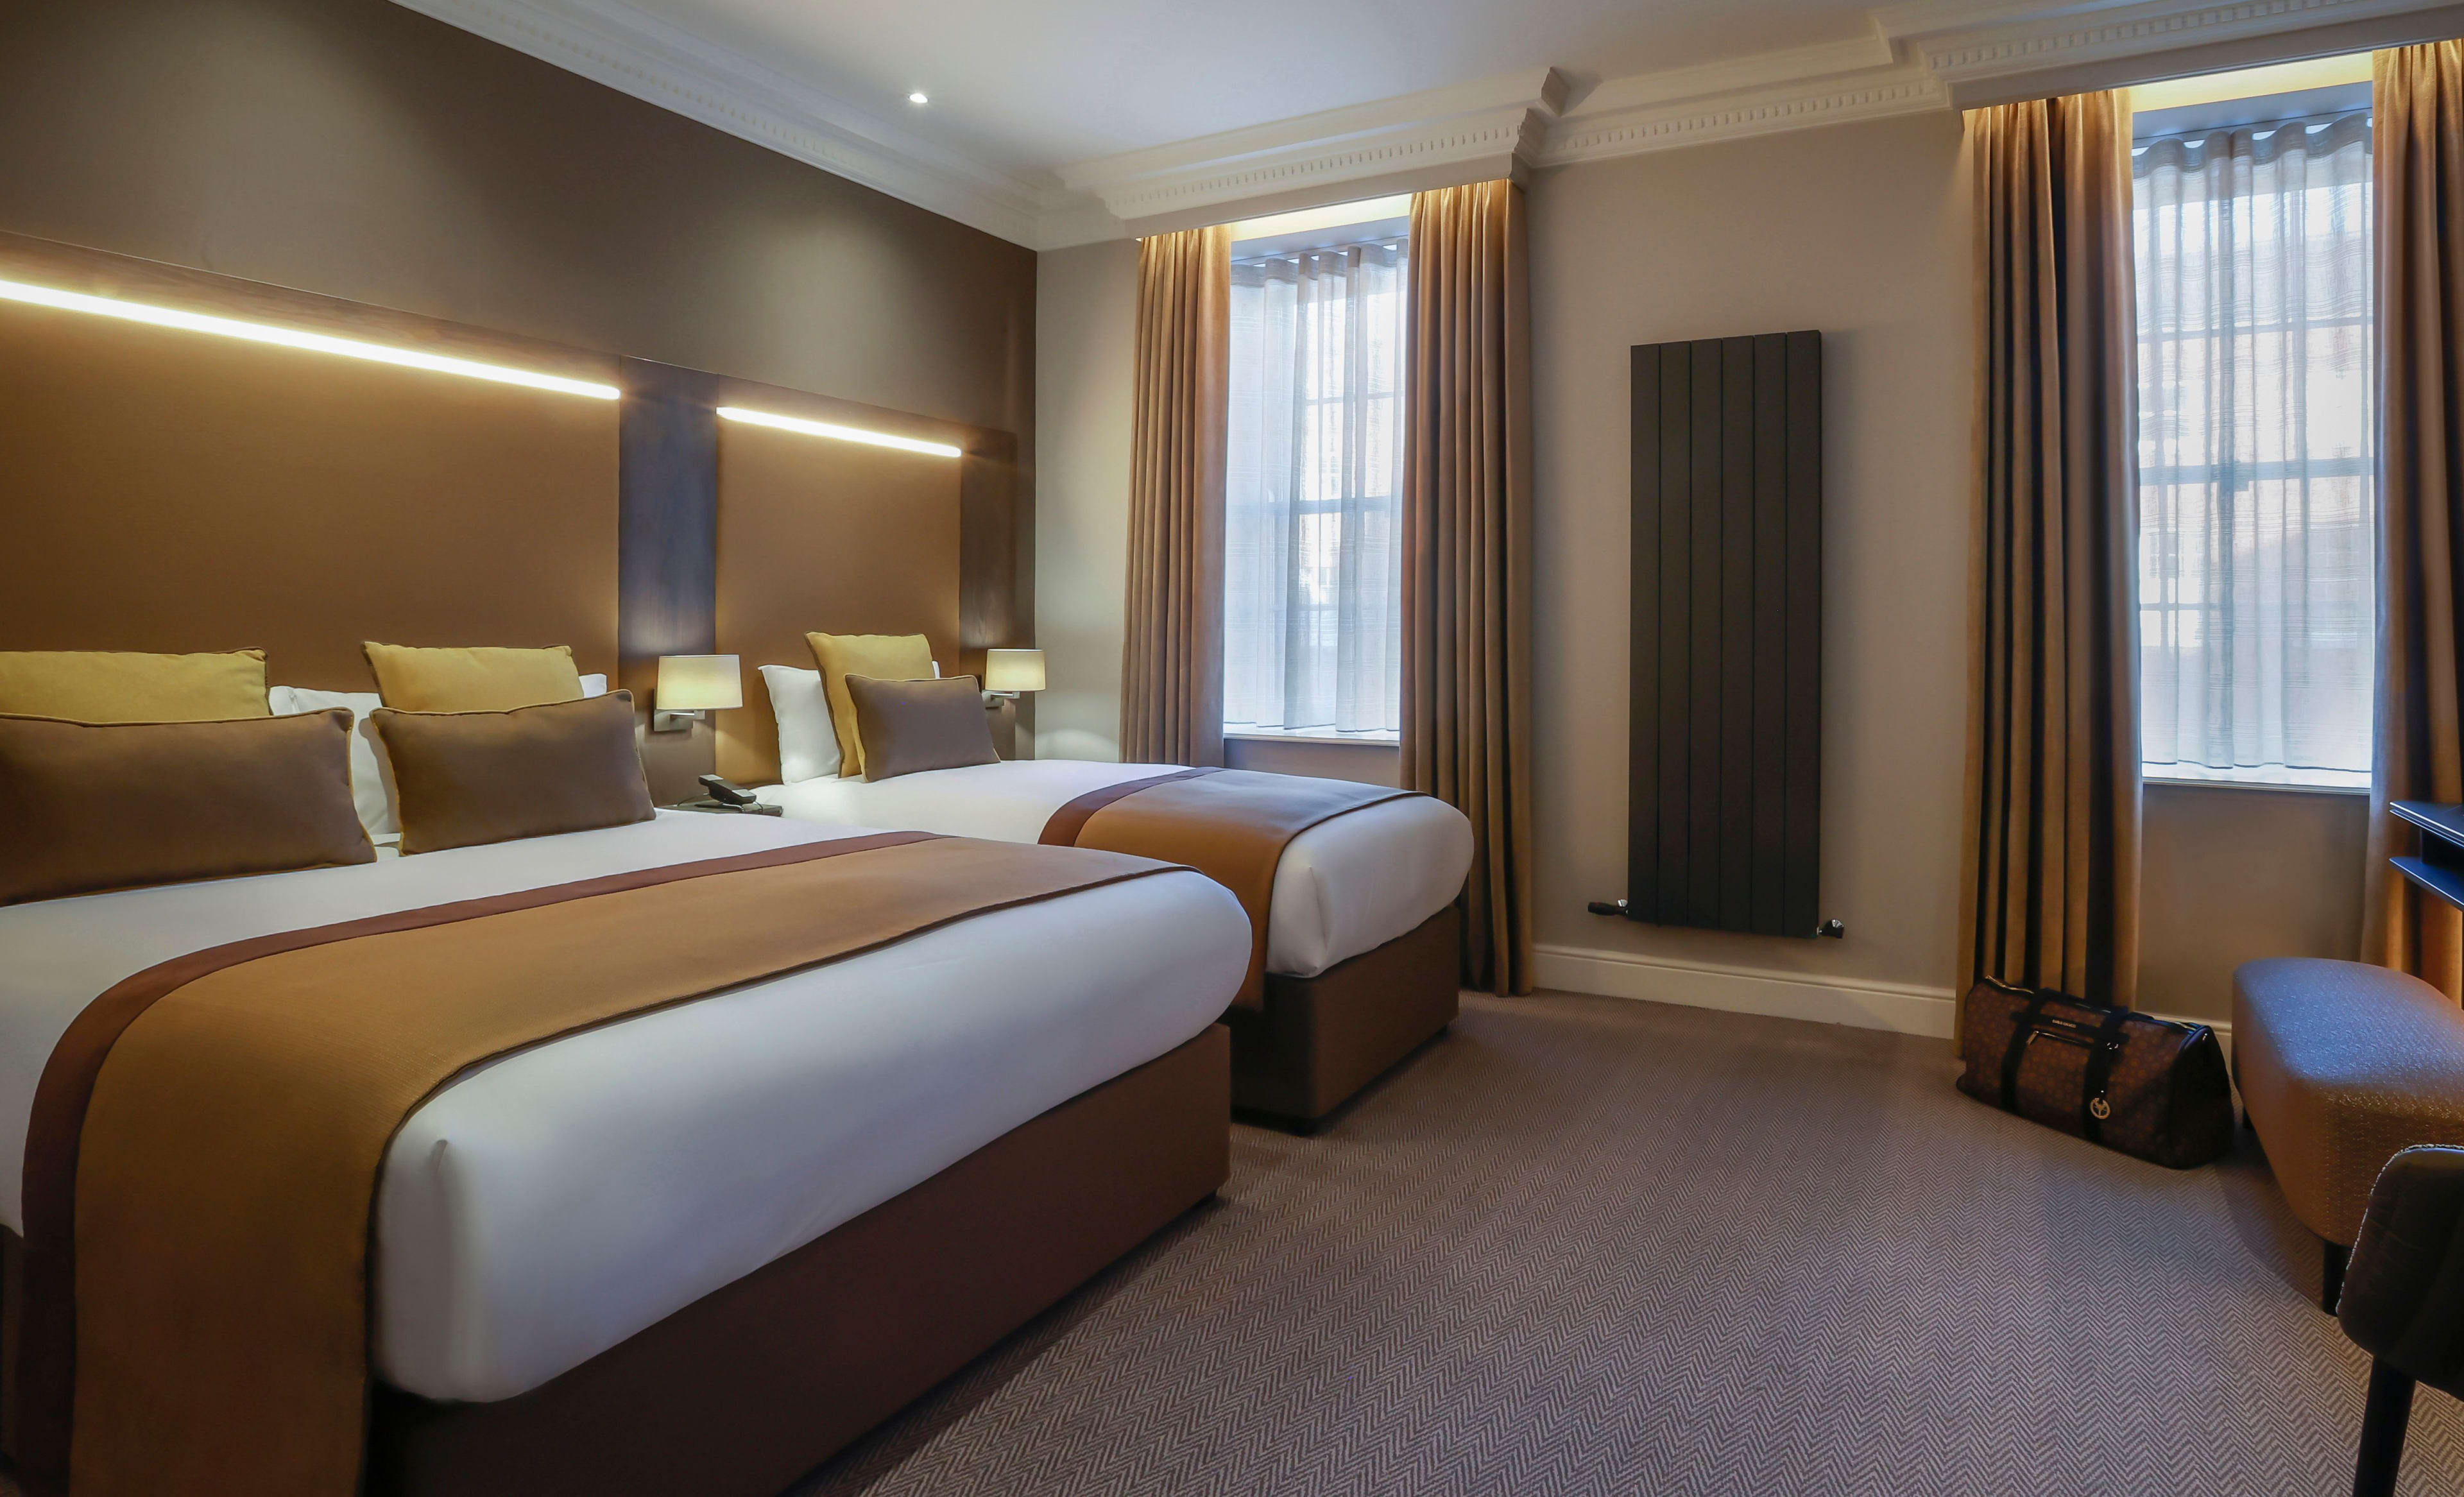 Belvedere Twin Room - Hotel in Dublin City Centre